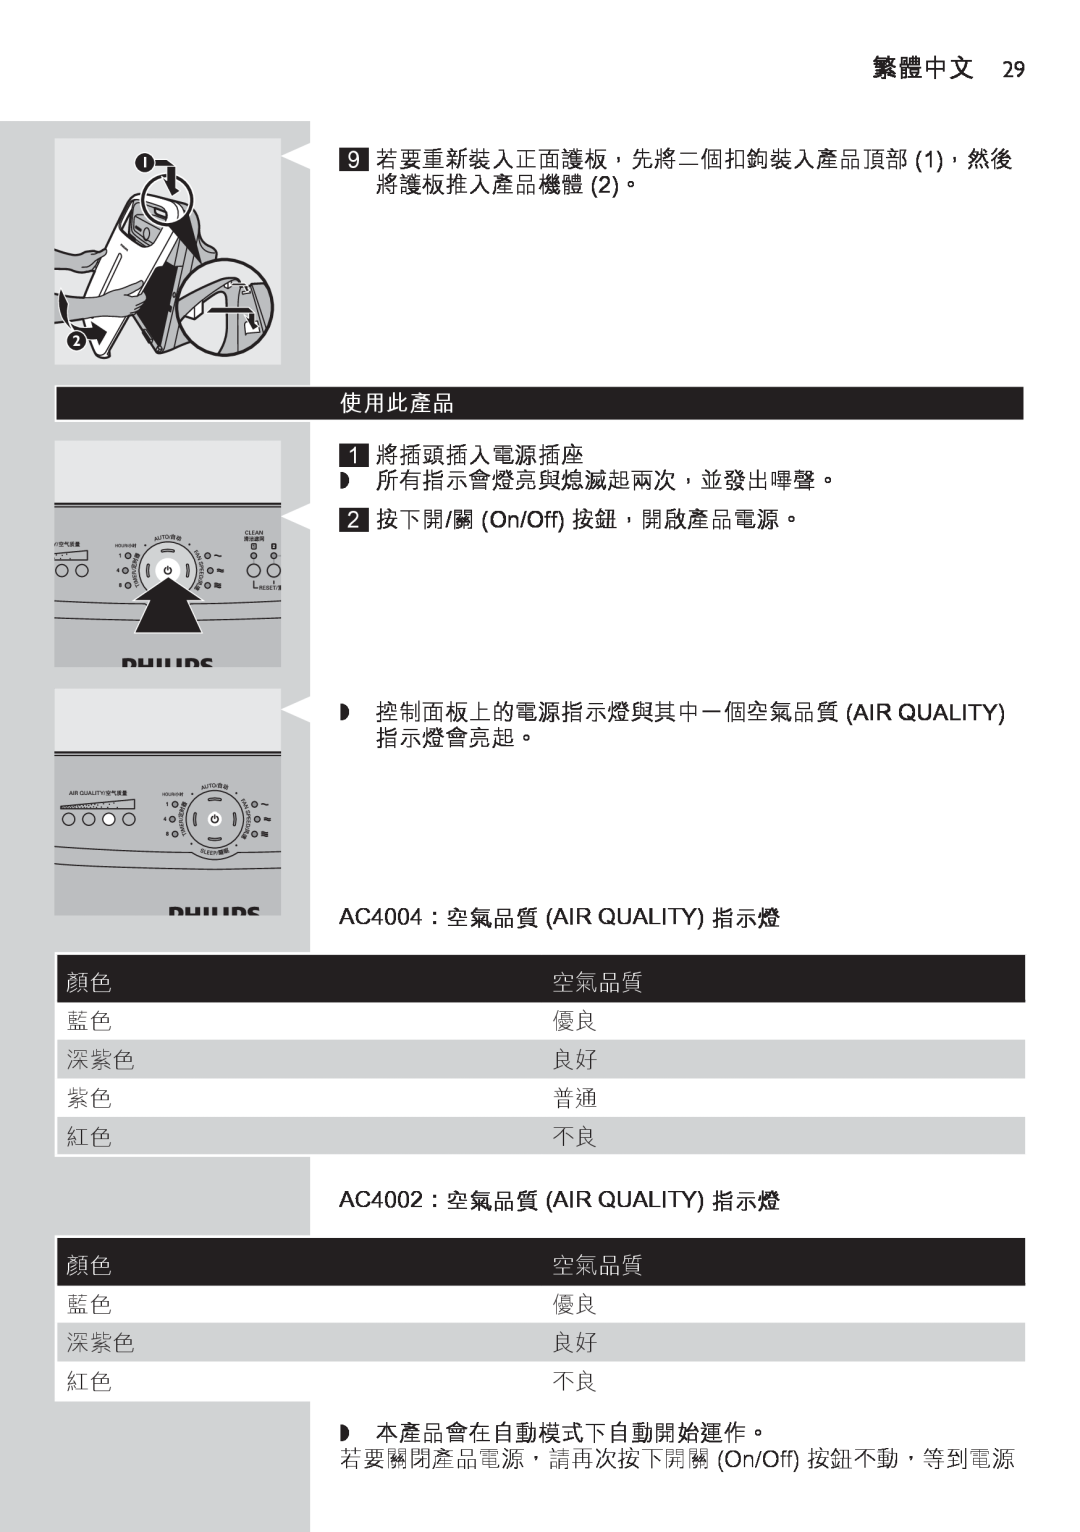 Philips manual 使用此產品, AC4004：空氣品質 AIR QUALITY 指示燈, AC4002：空氣品質 AIR QUALITY 指示燈, 繁體中文 